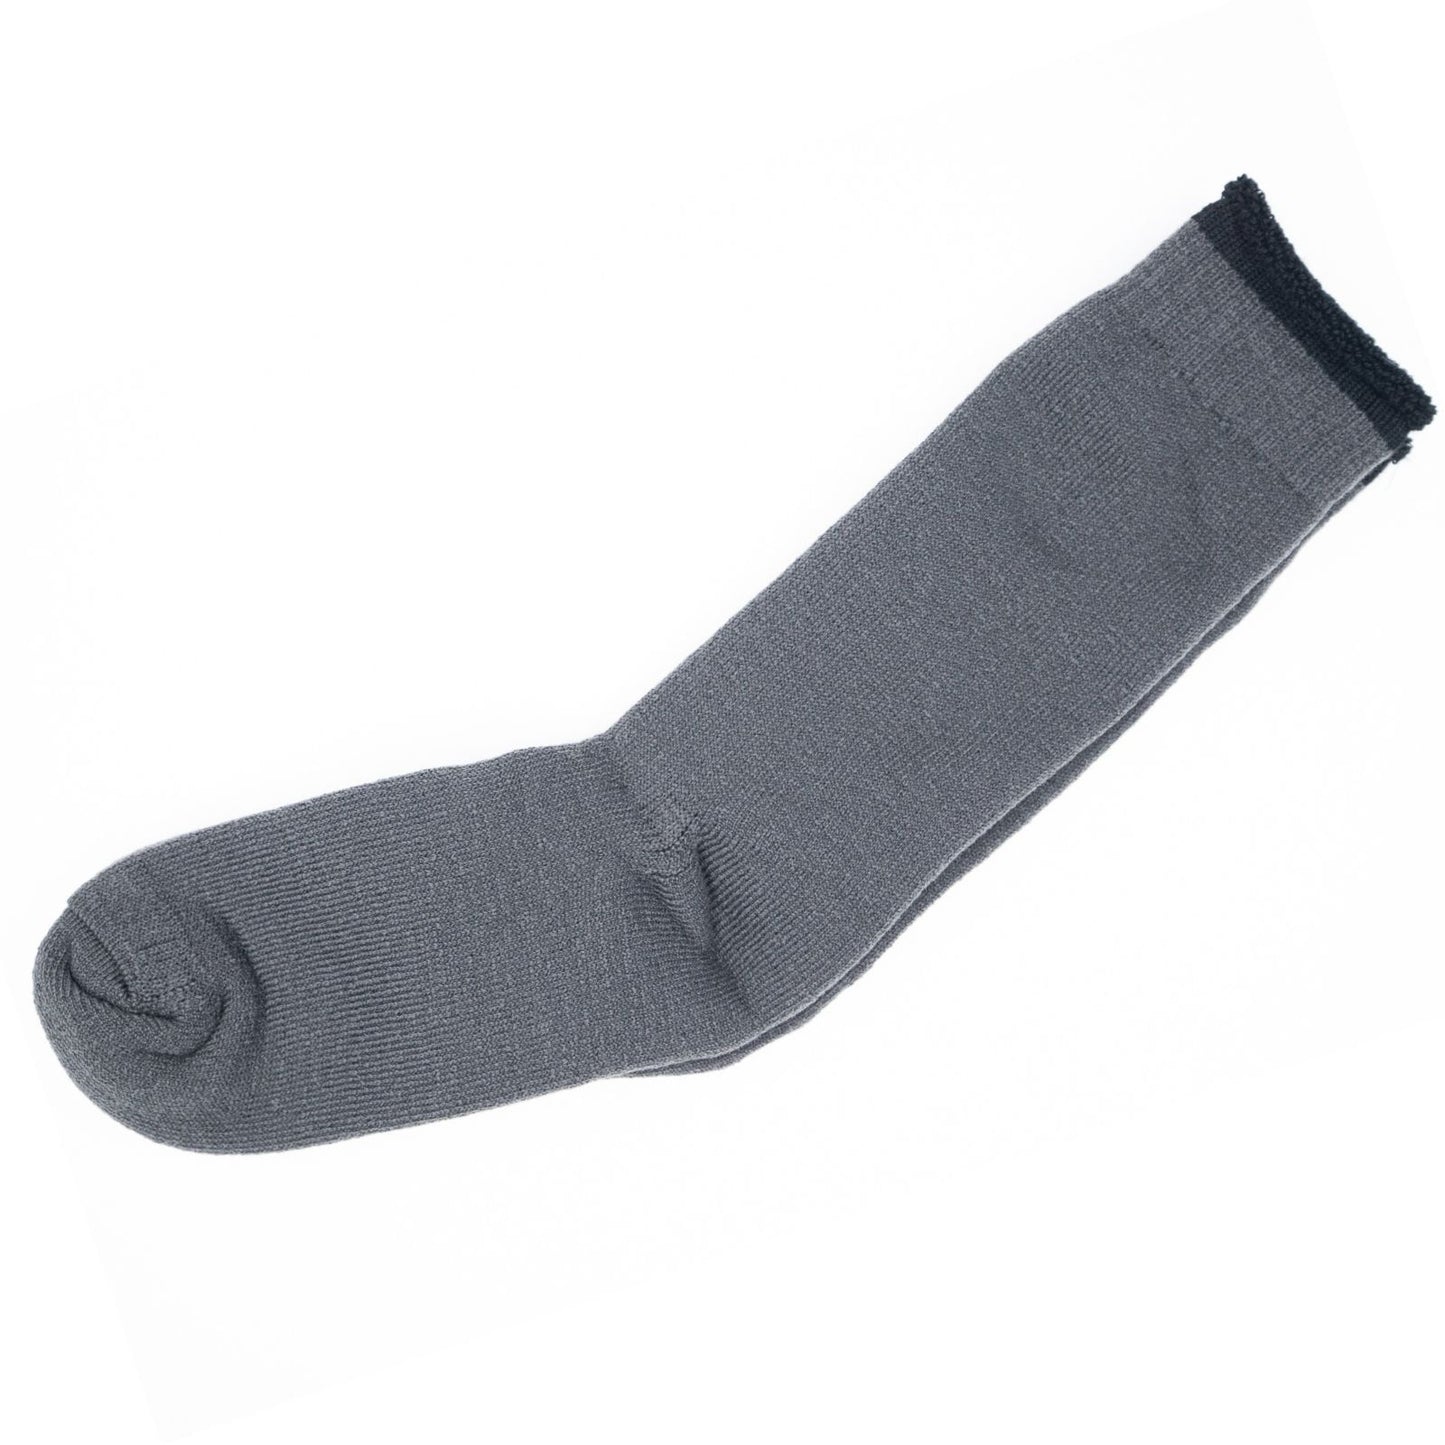 3 Pairs Thick Woollen Blend Work Socks